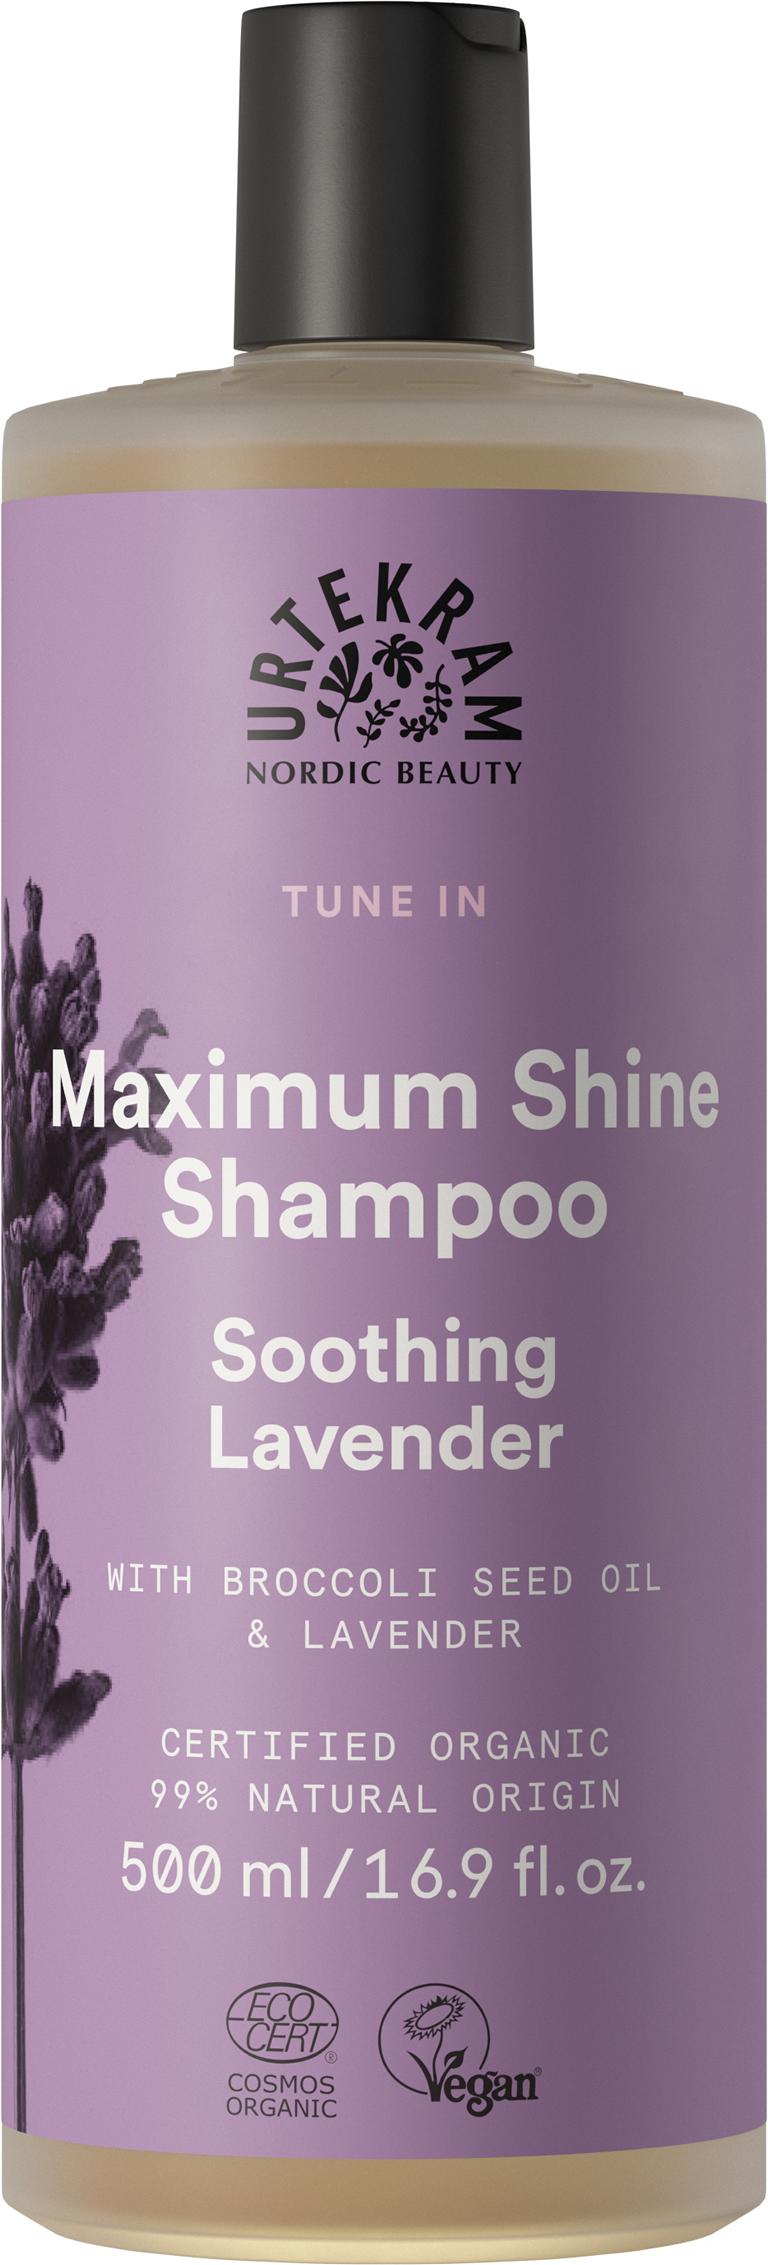 Urtekram Soothing Lavender Shampoo 500ml